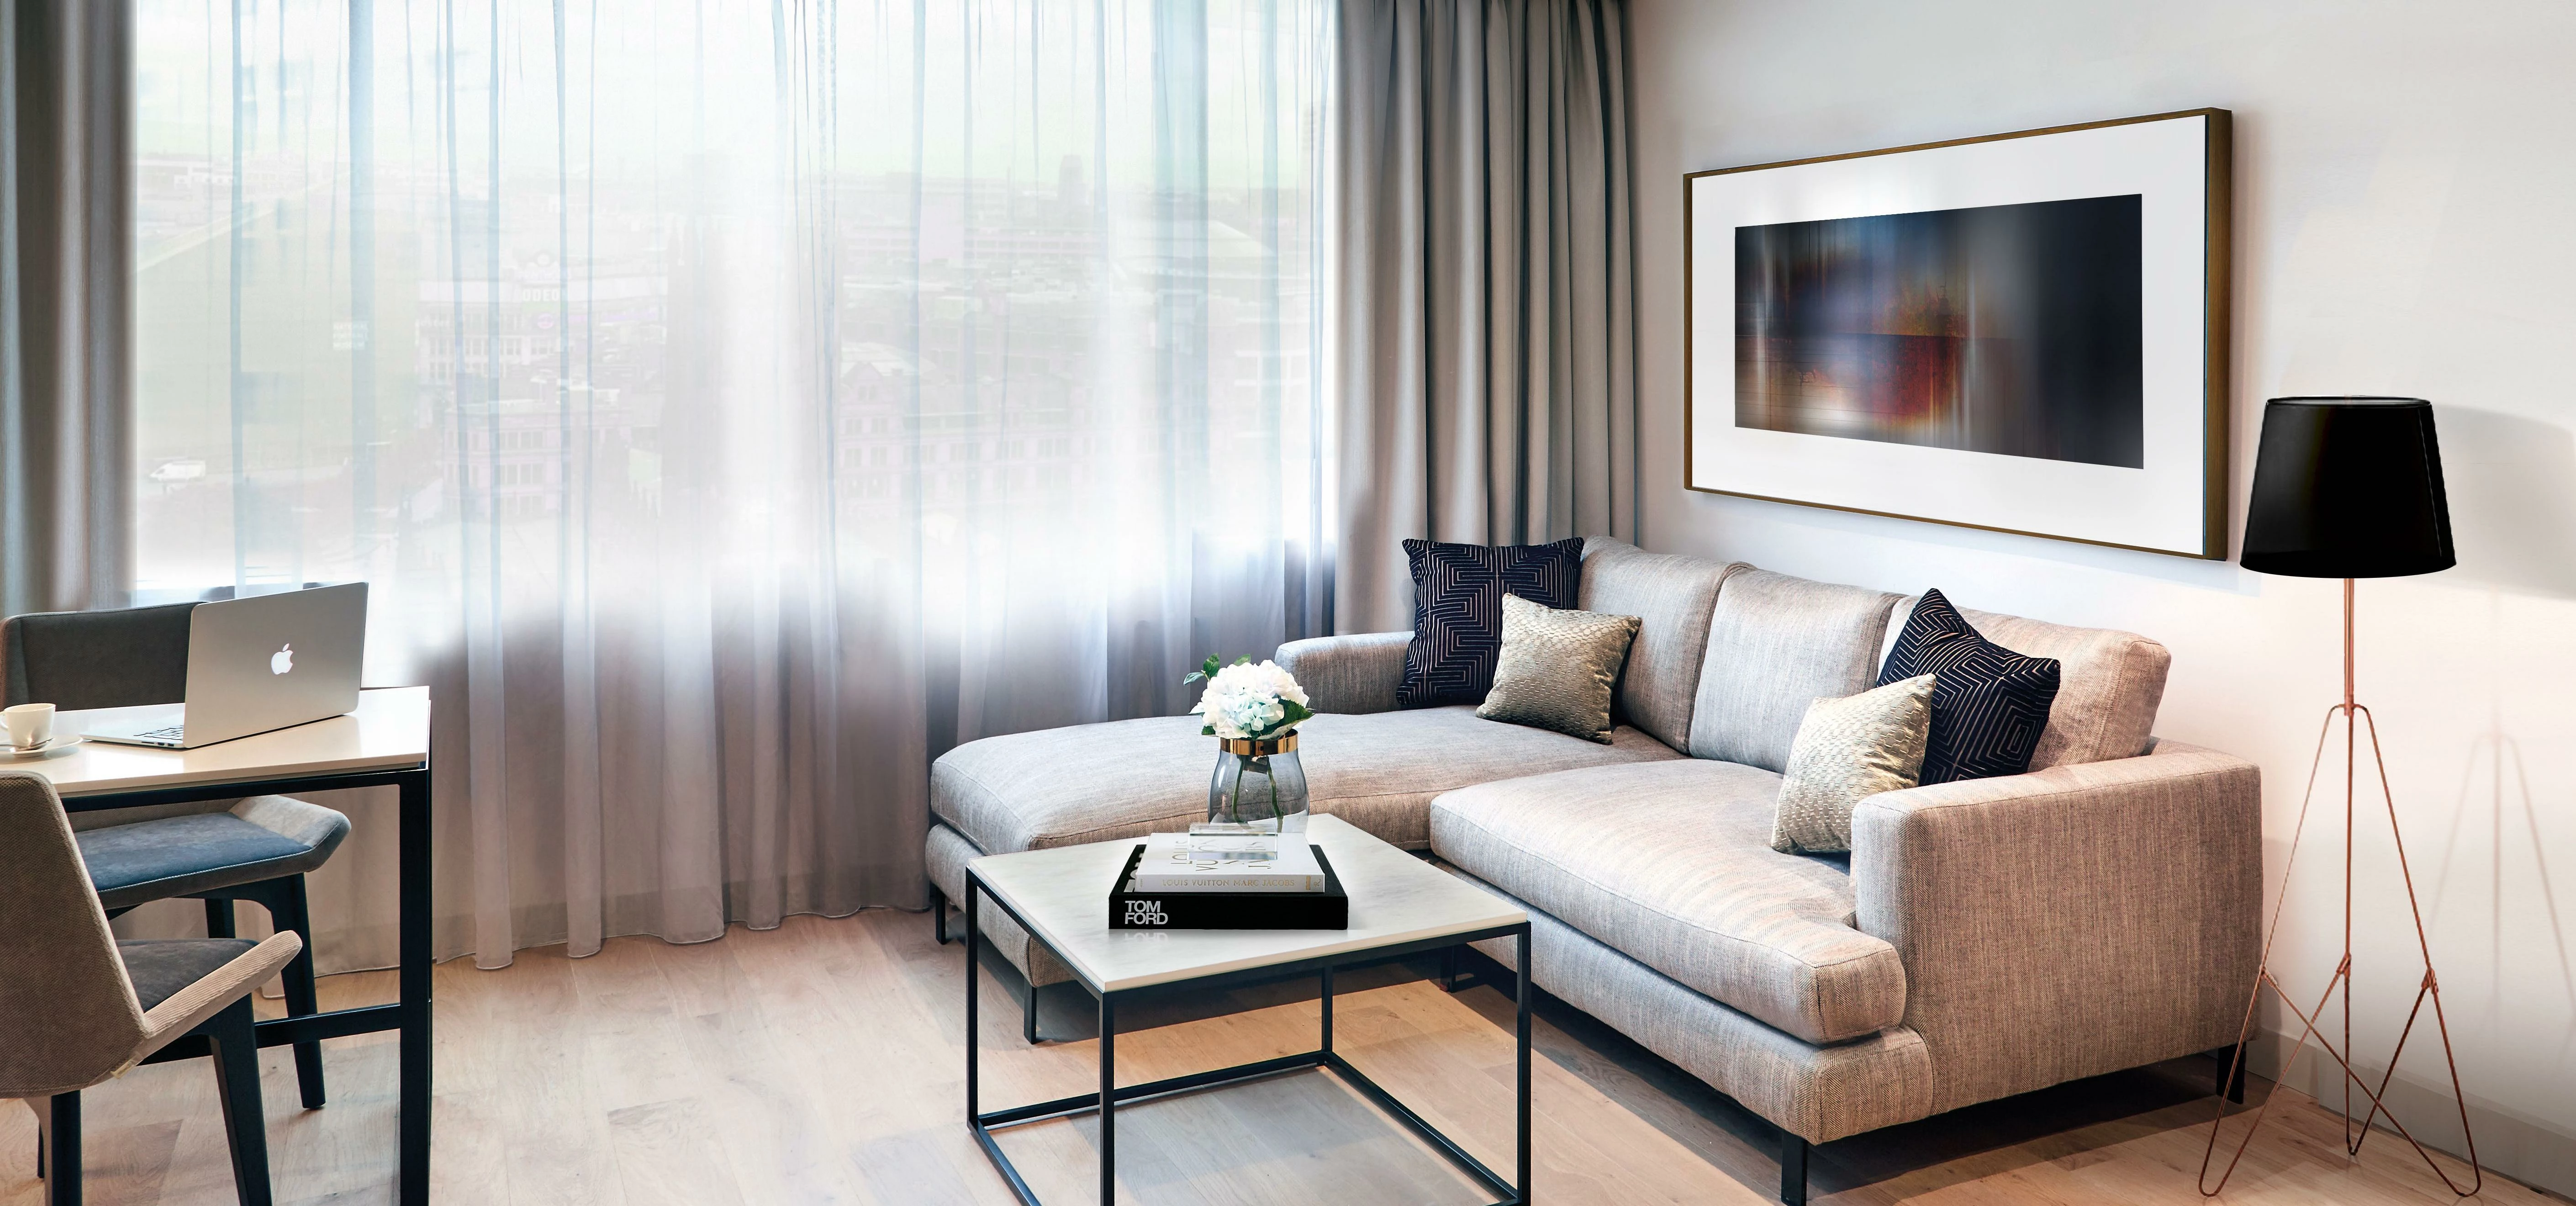 CitySuites luxury serviced apartment